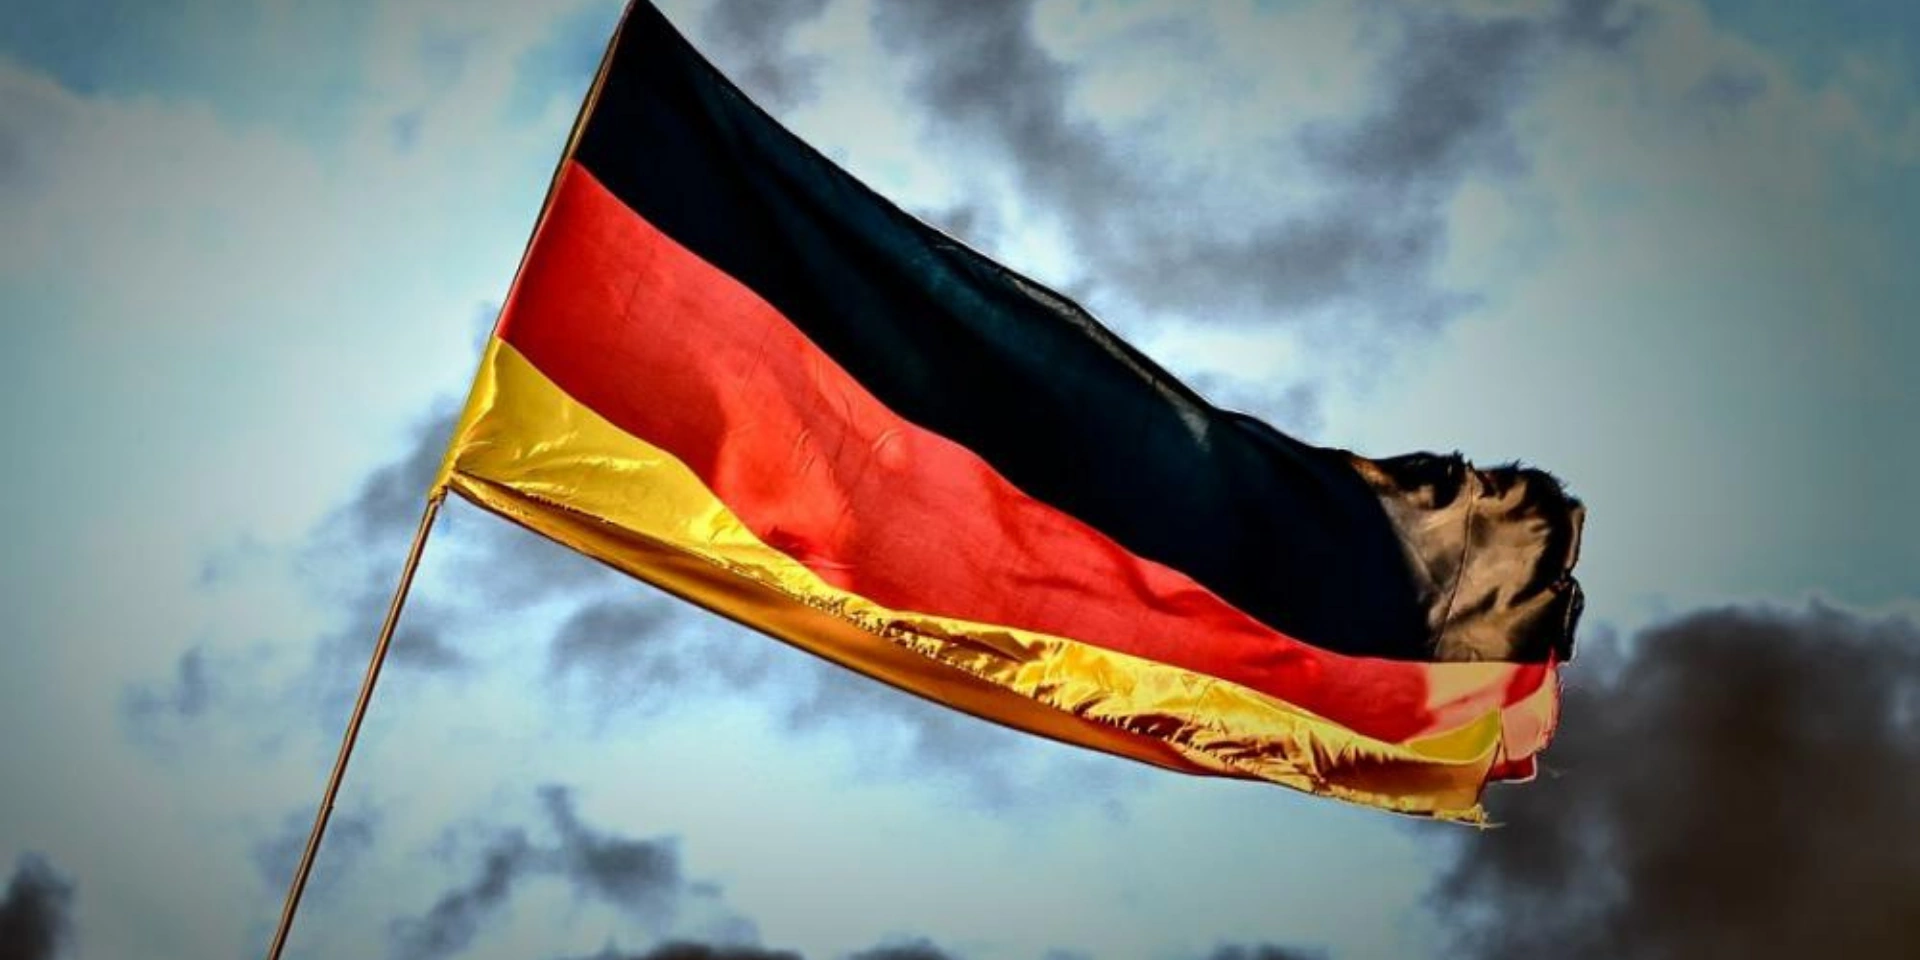 German flag representing living in Germany